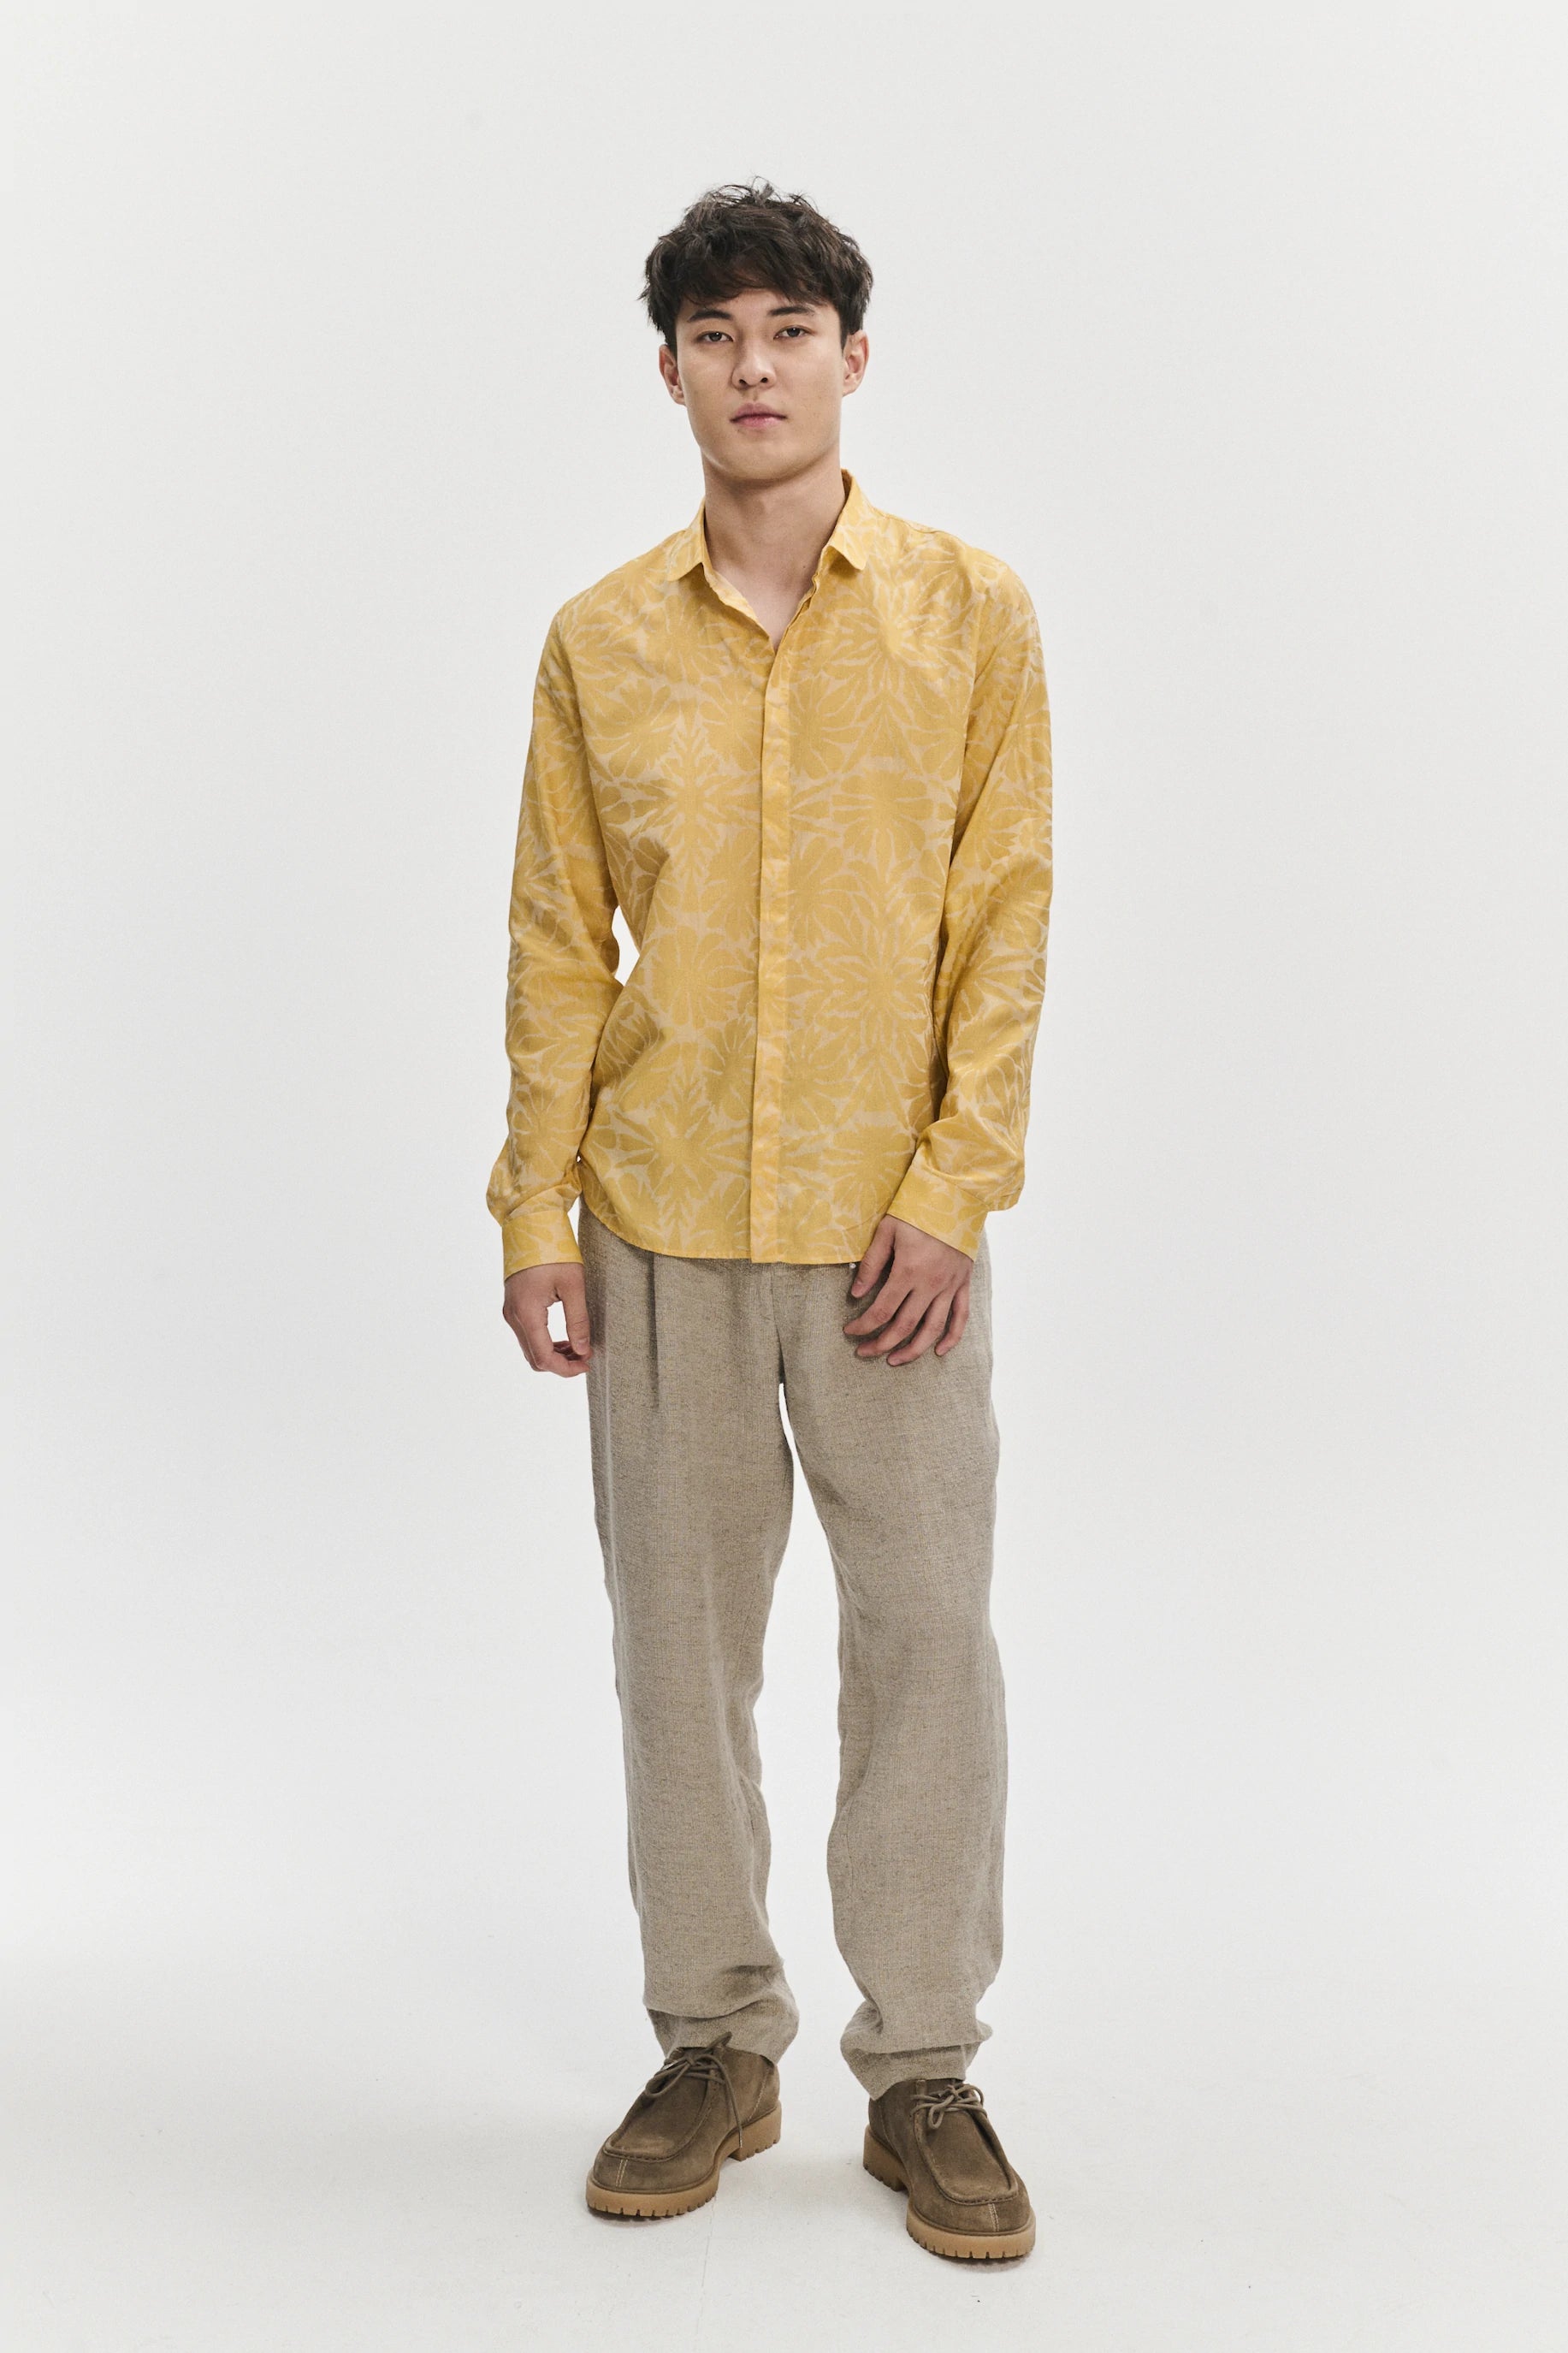 Yellow Long Sleeve Shirt Brown Leather Belt Khaki Pants Brown Sneakers -  Men's Fashion For Less